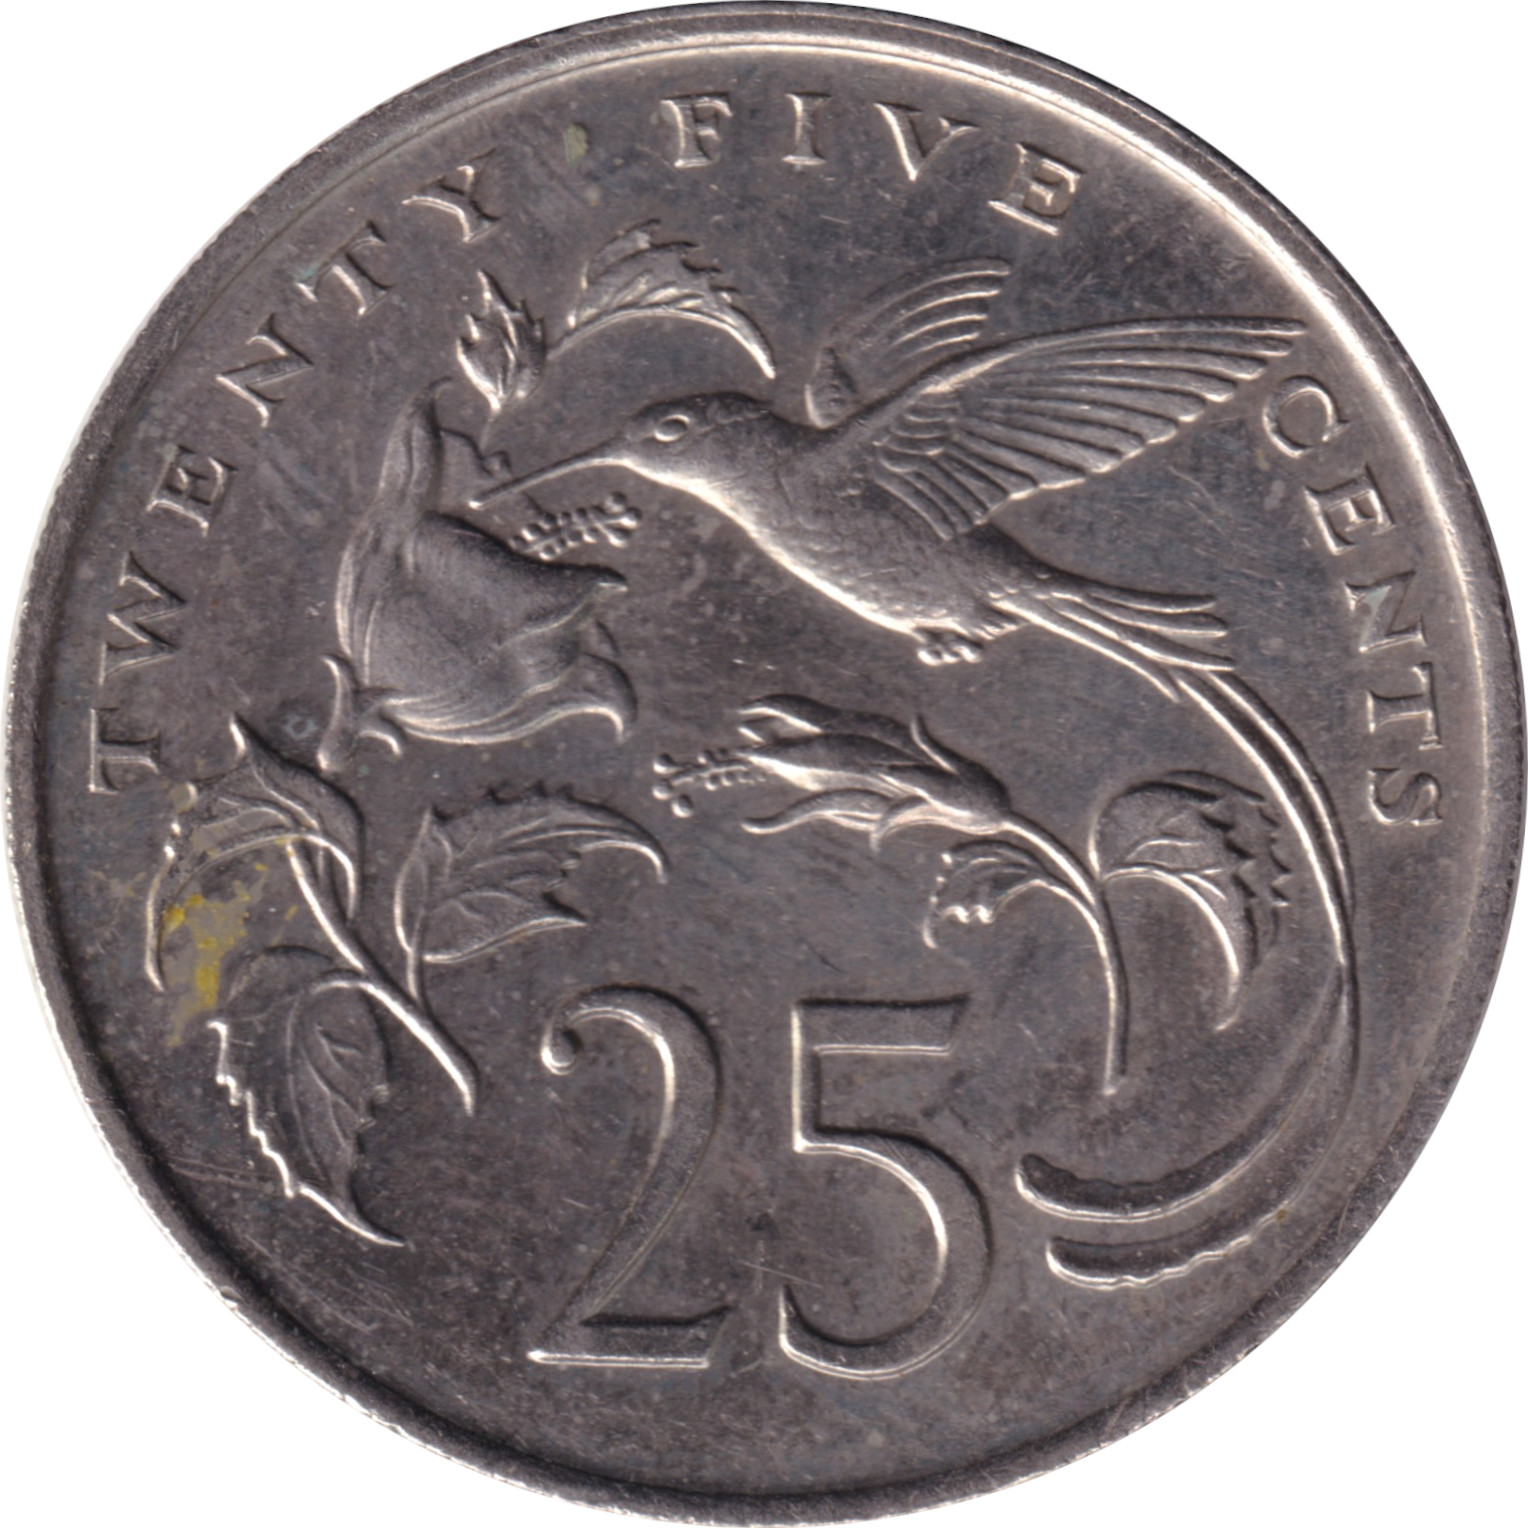 25 cents - Oiseau - Grande légende